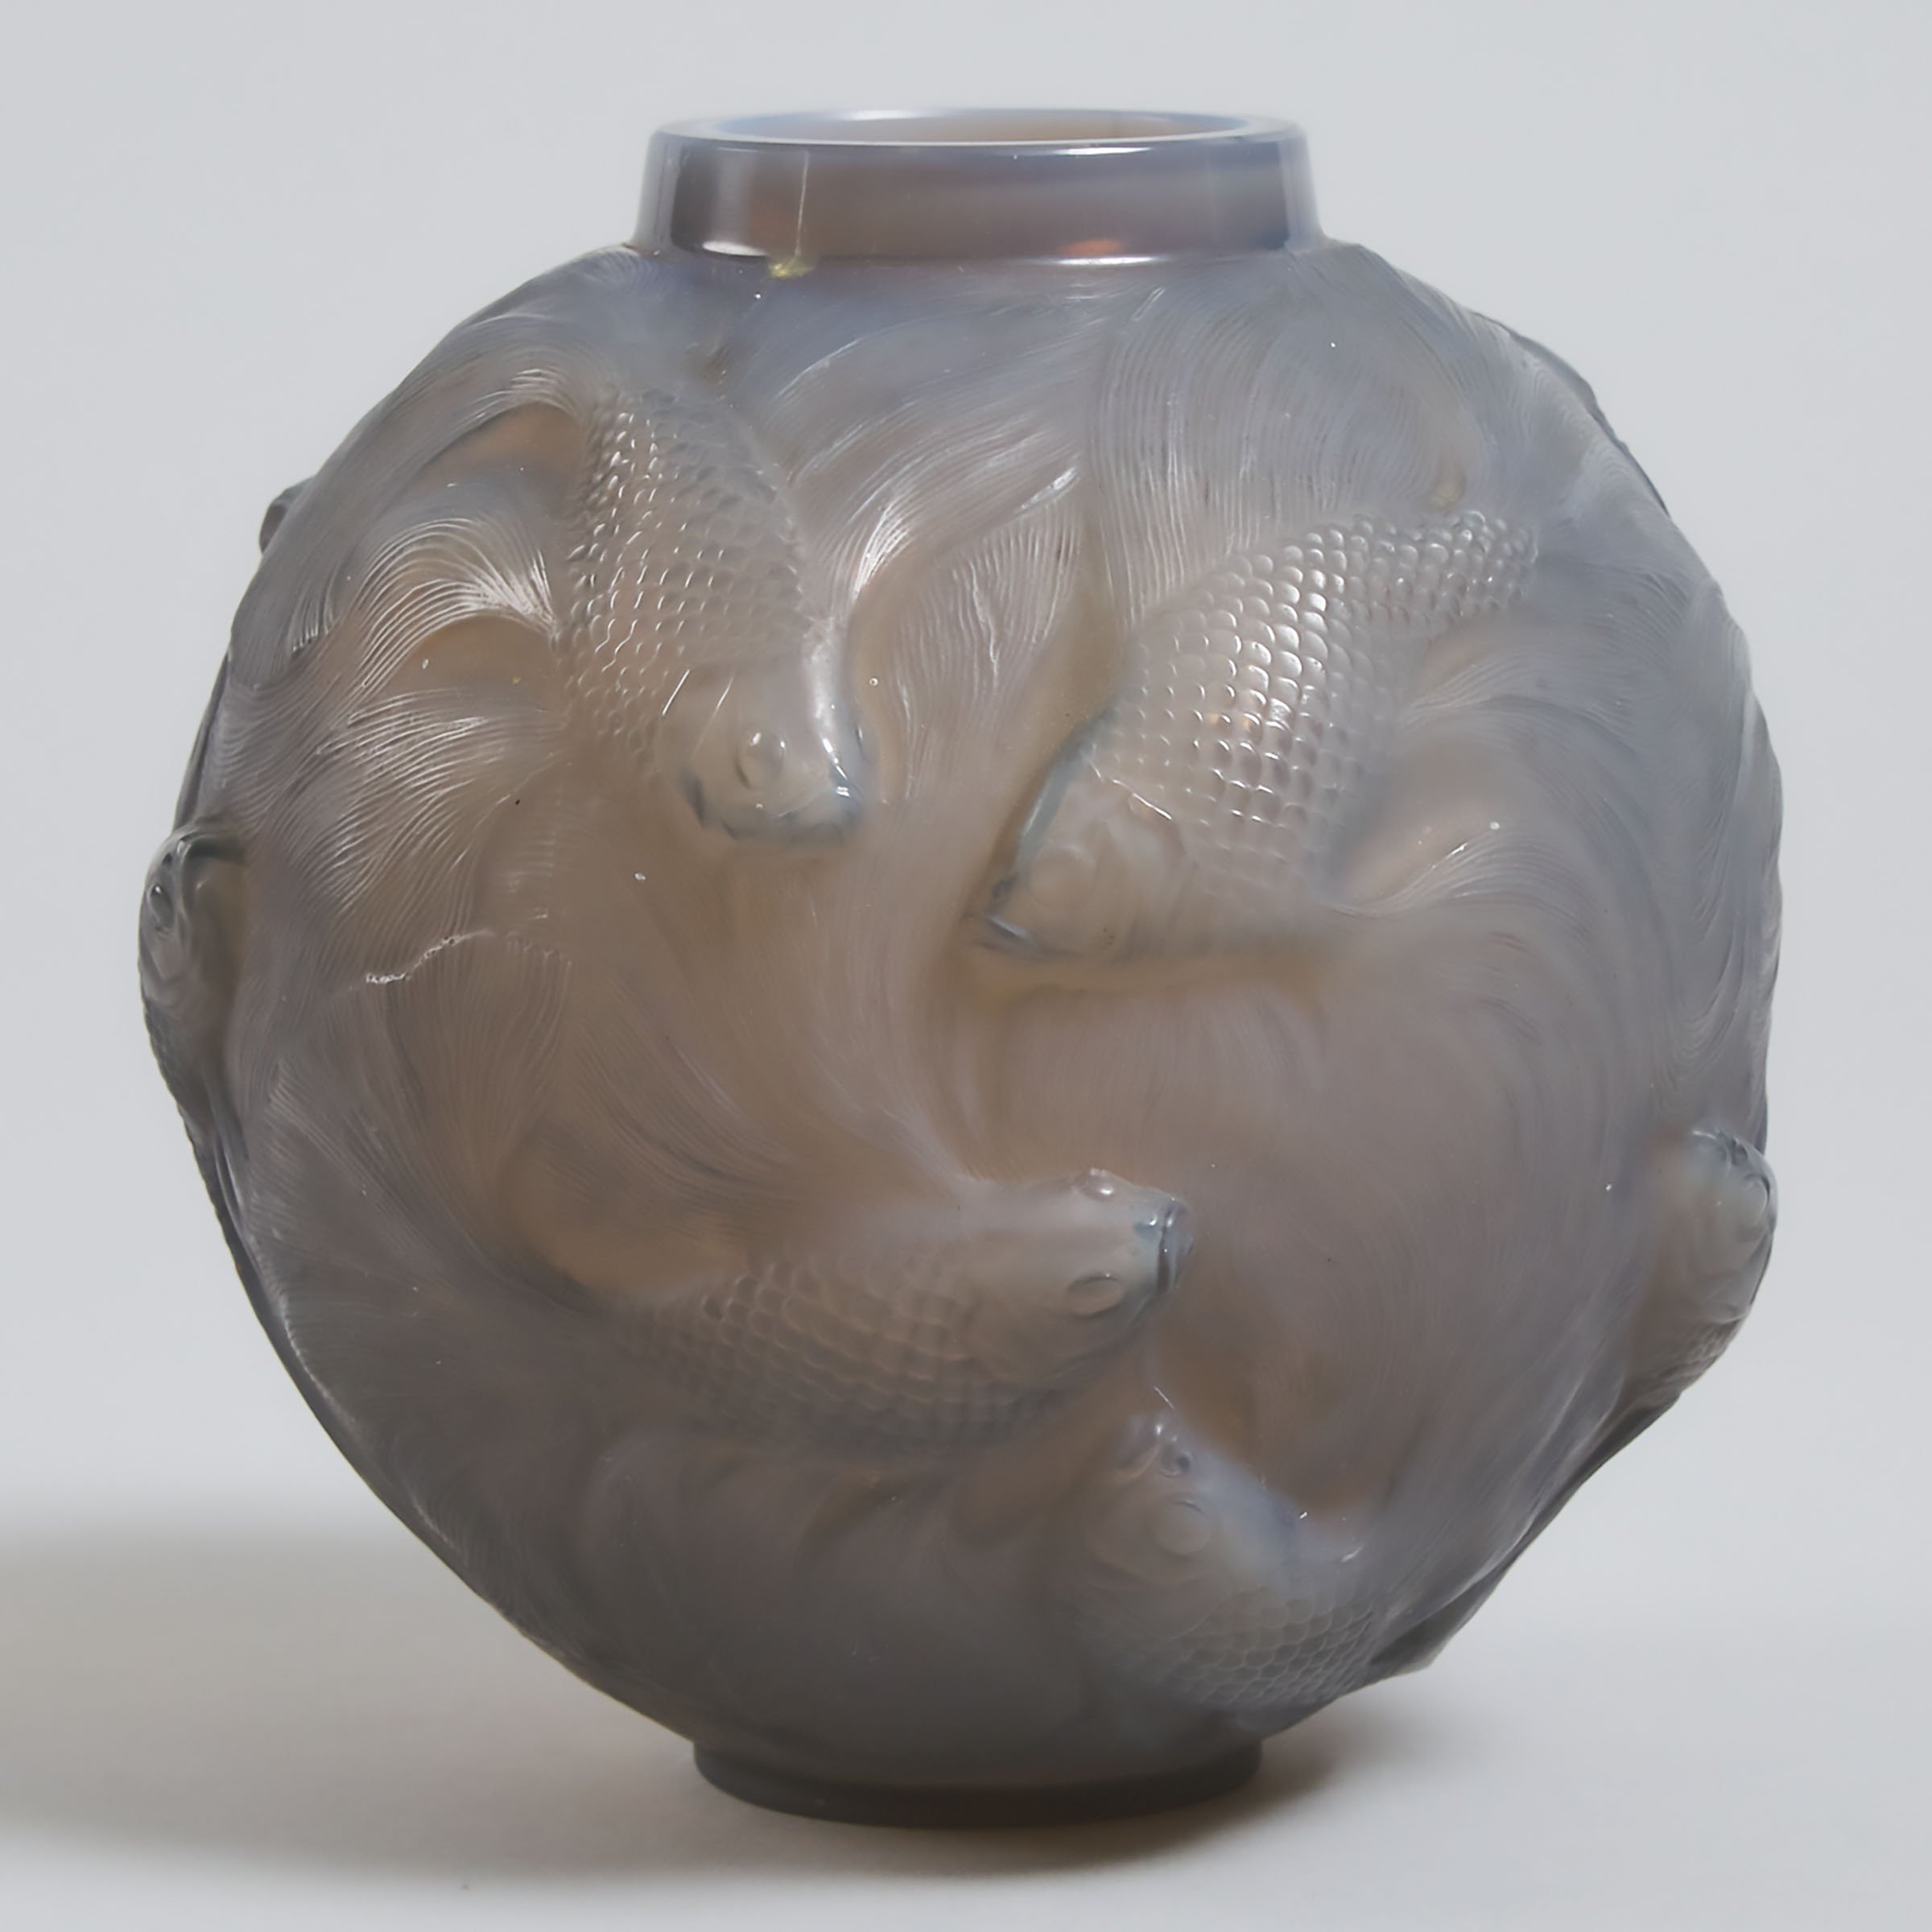 ‘Formose’, Lalique Moulded and Grey-Cased Opalescent Glass Vase, c.1930